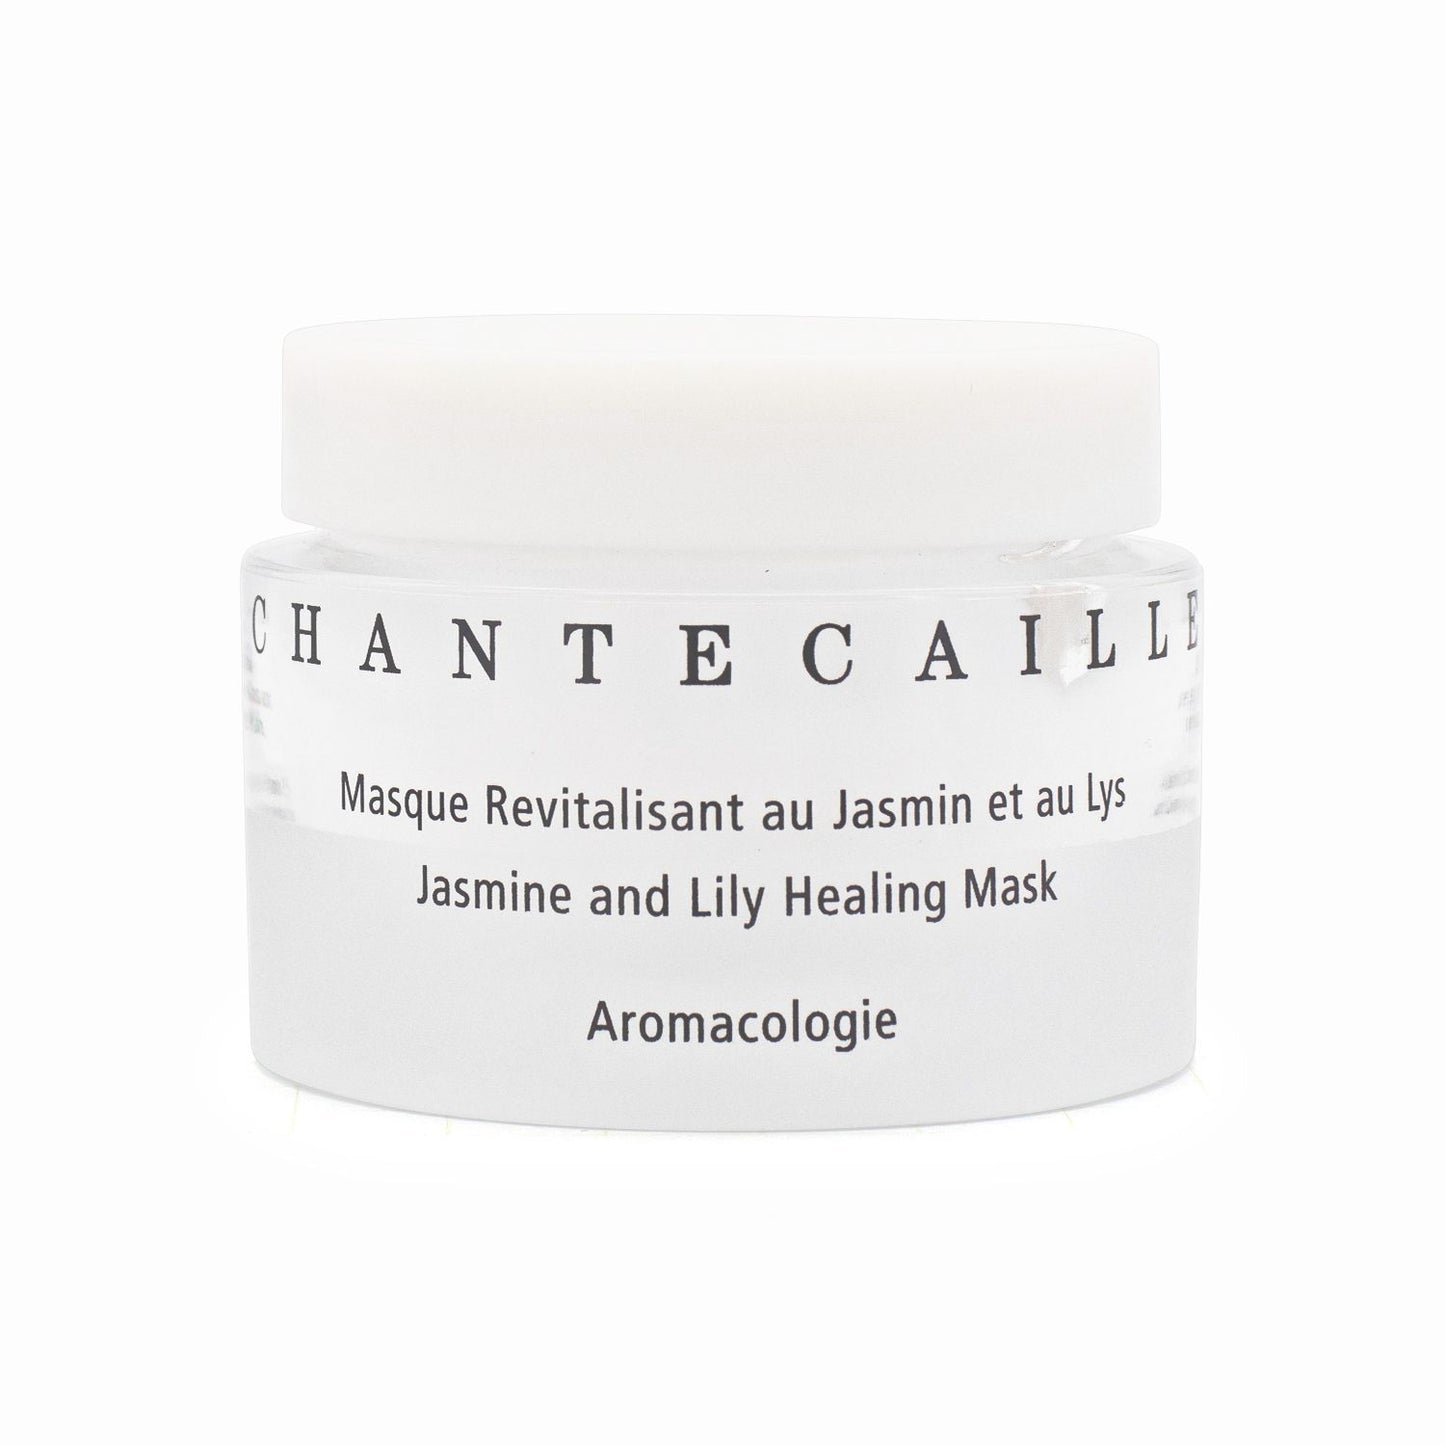 Chantecaille Jasmine & Lily Healing Mask 50ml - Damaged Lid & Imperfect Box